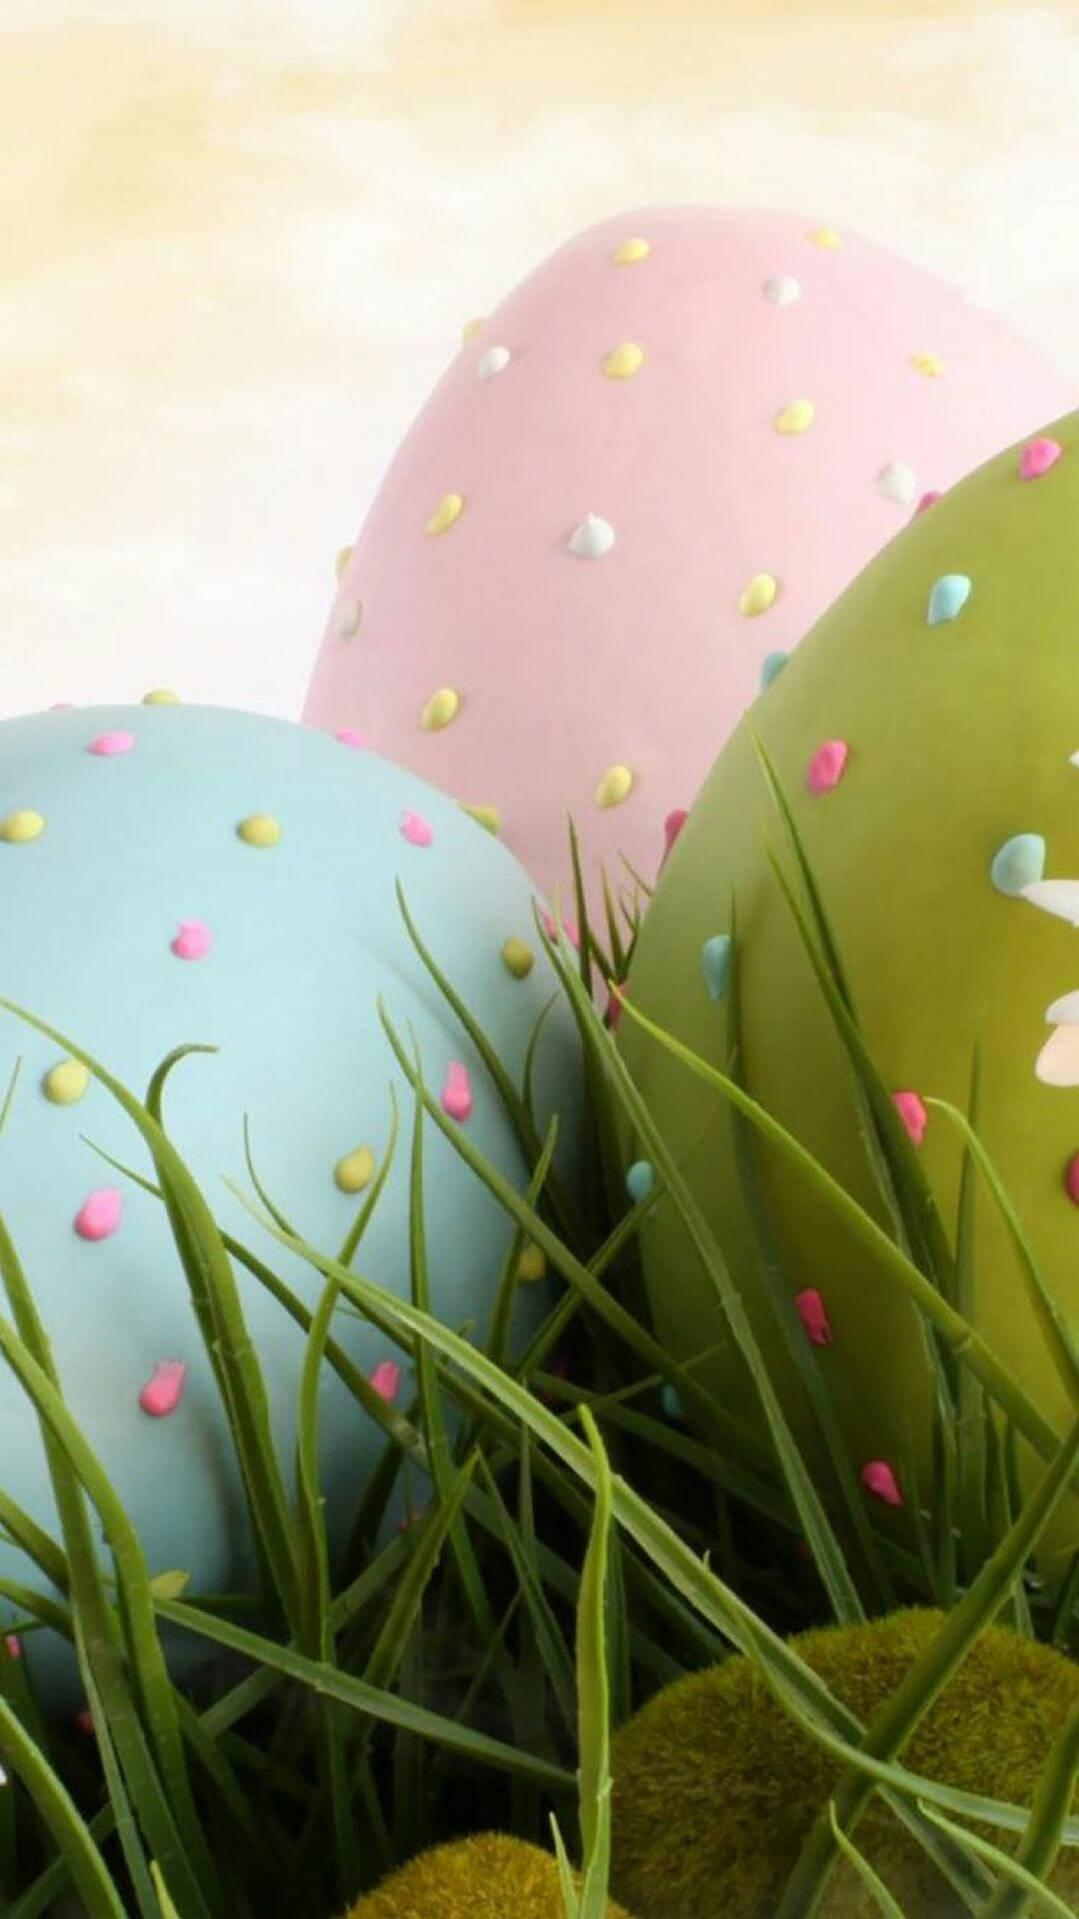 Download Pastel Easter Eggs Iphone Wallpaper Wallpaper